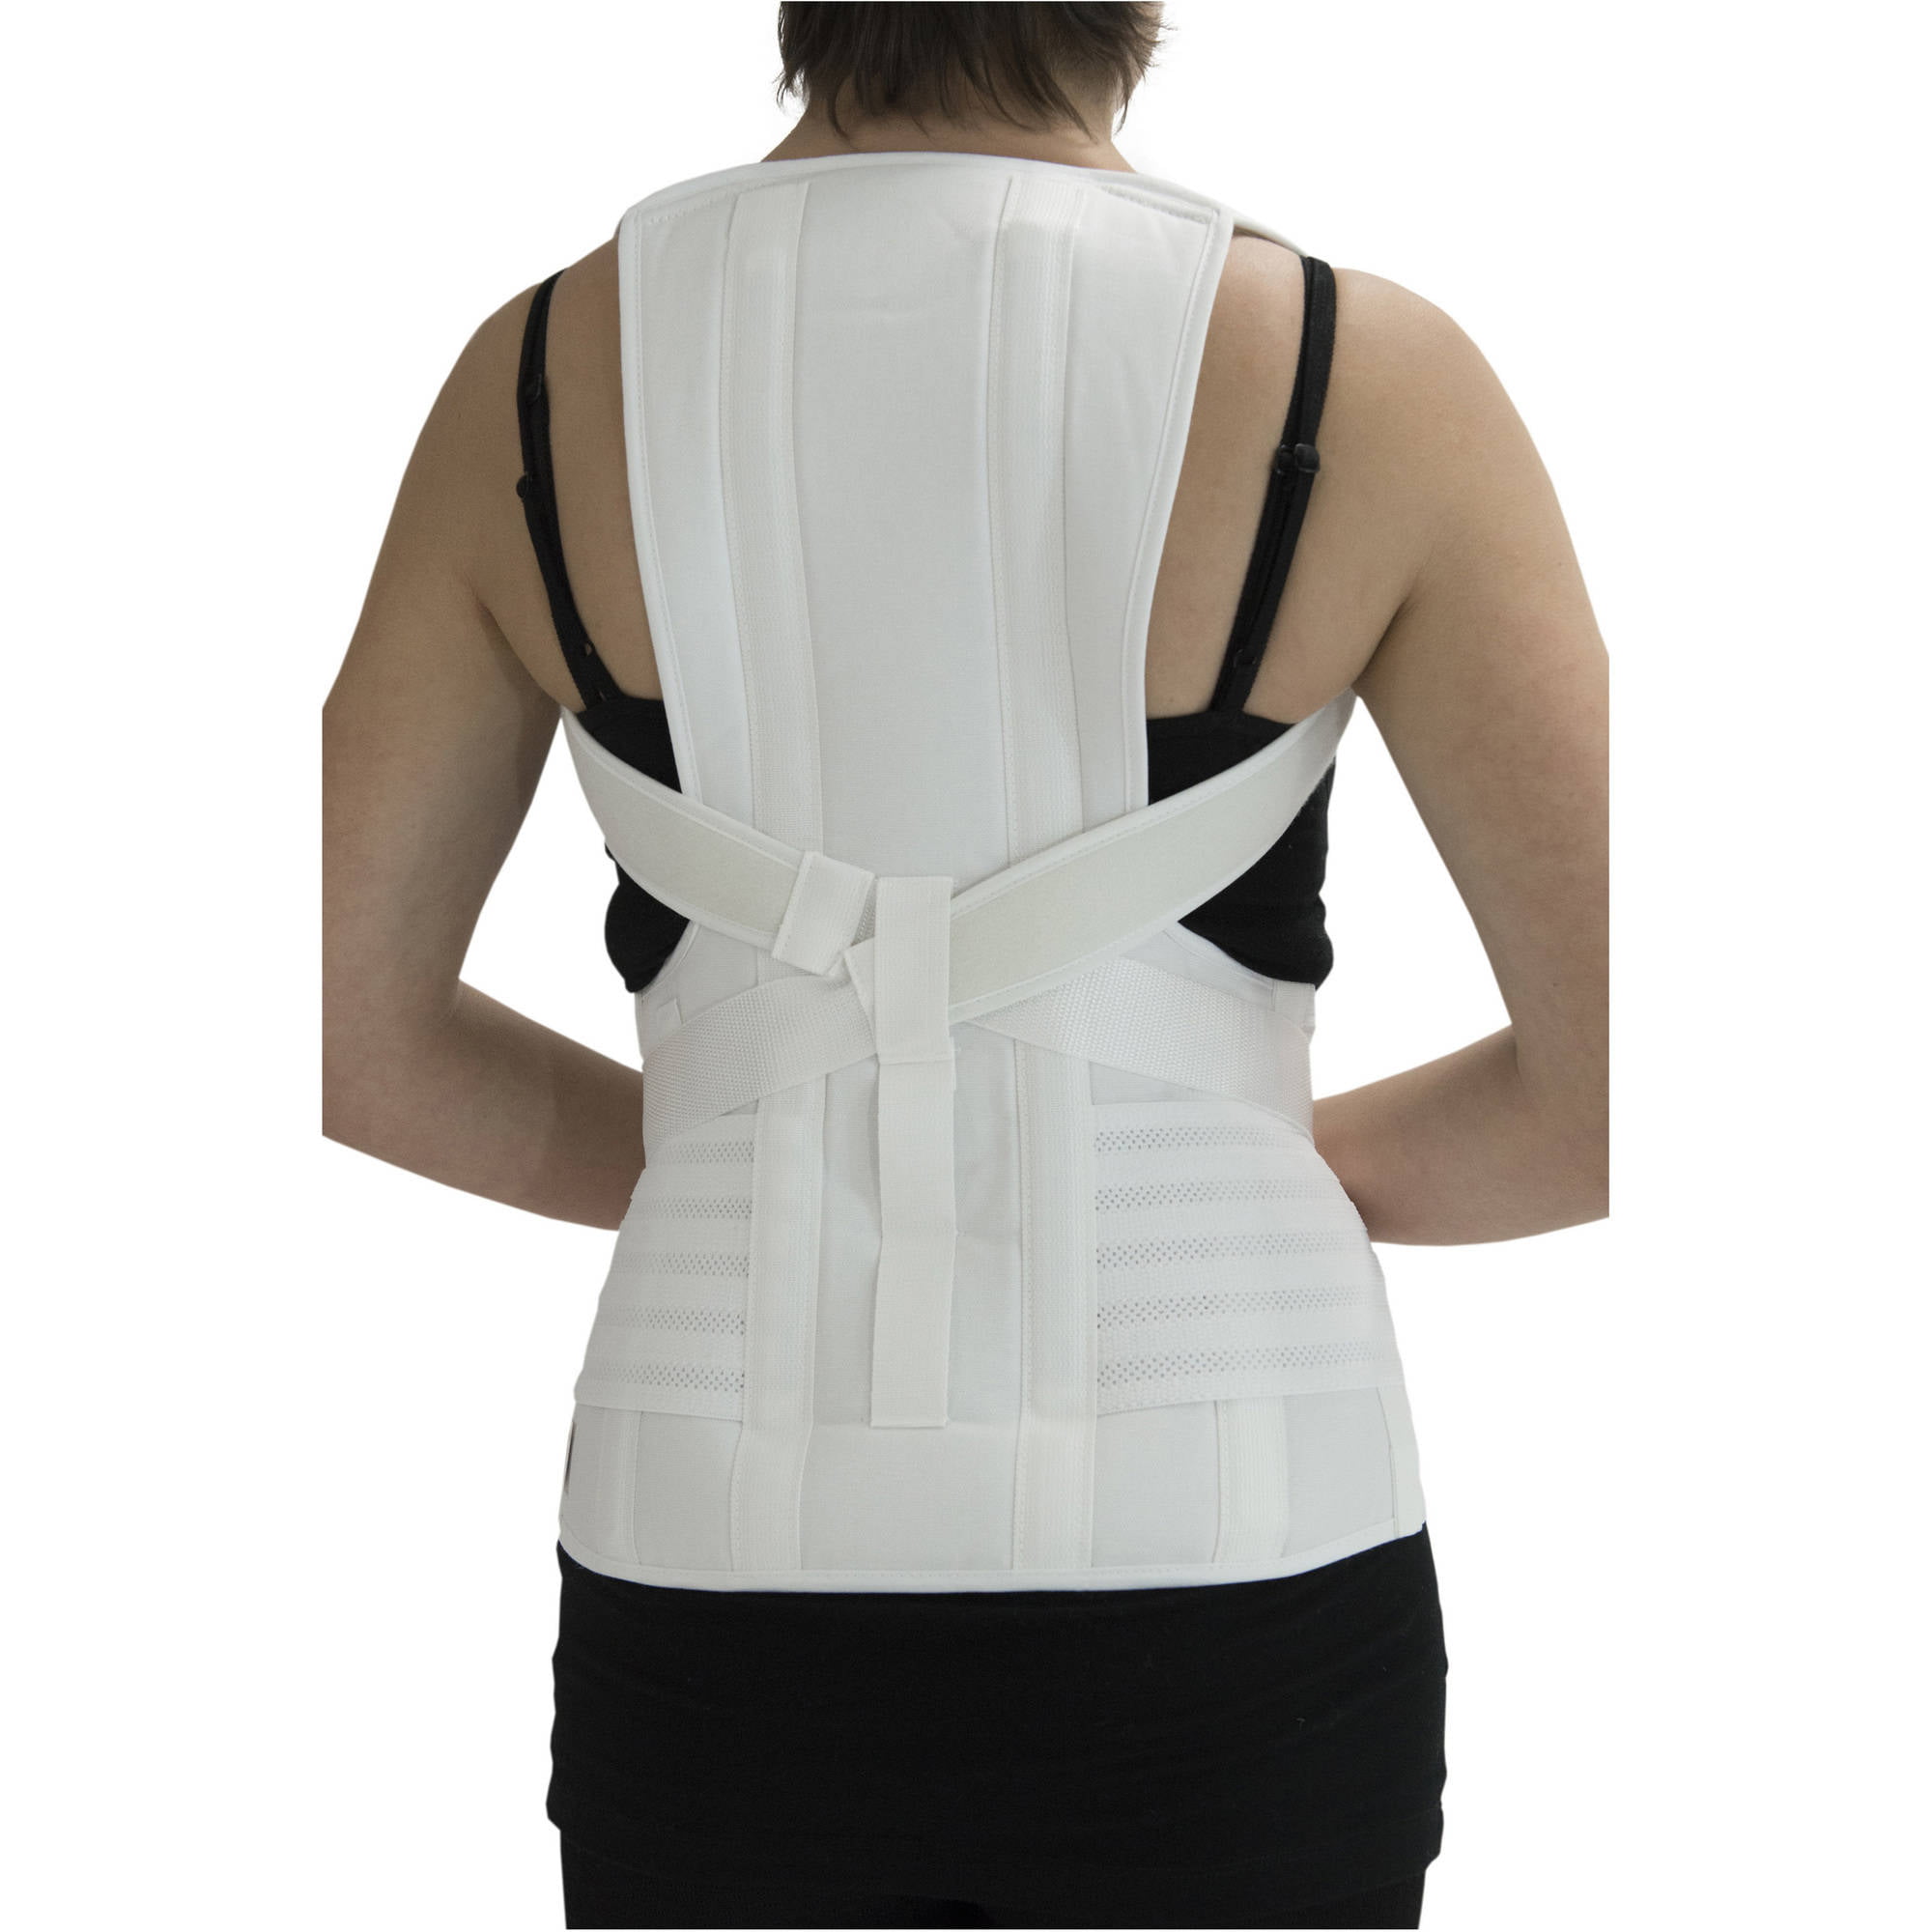 AMNHDO Humpback Correction Belt Back Brace Orthosis Spinal Posture  Corrector (M) 